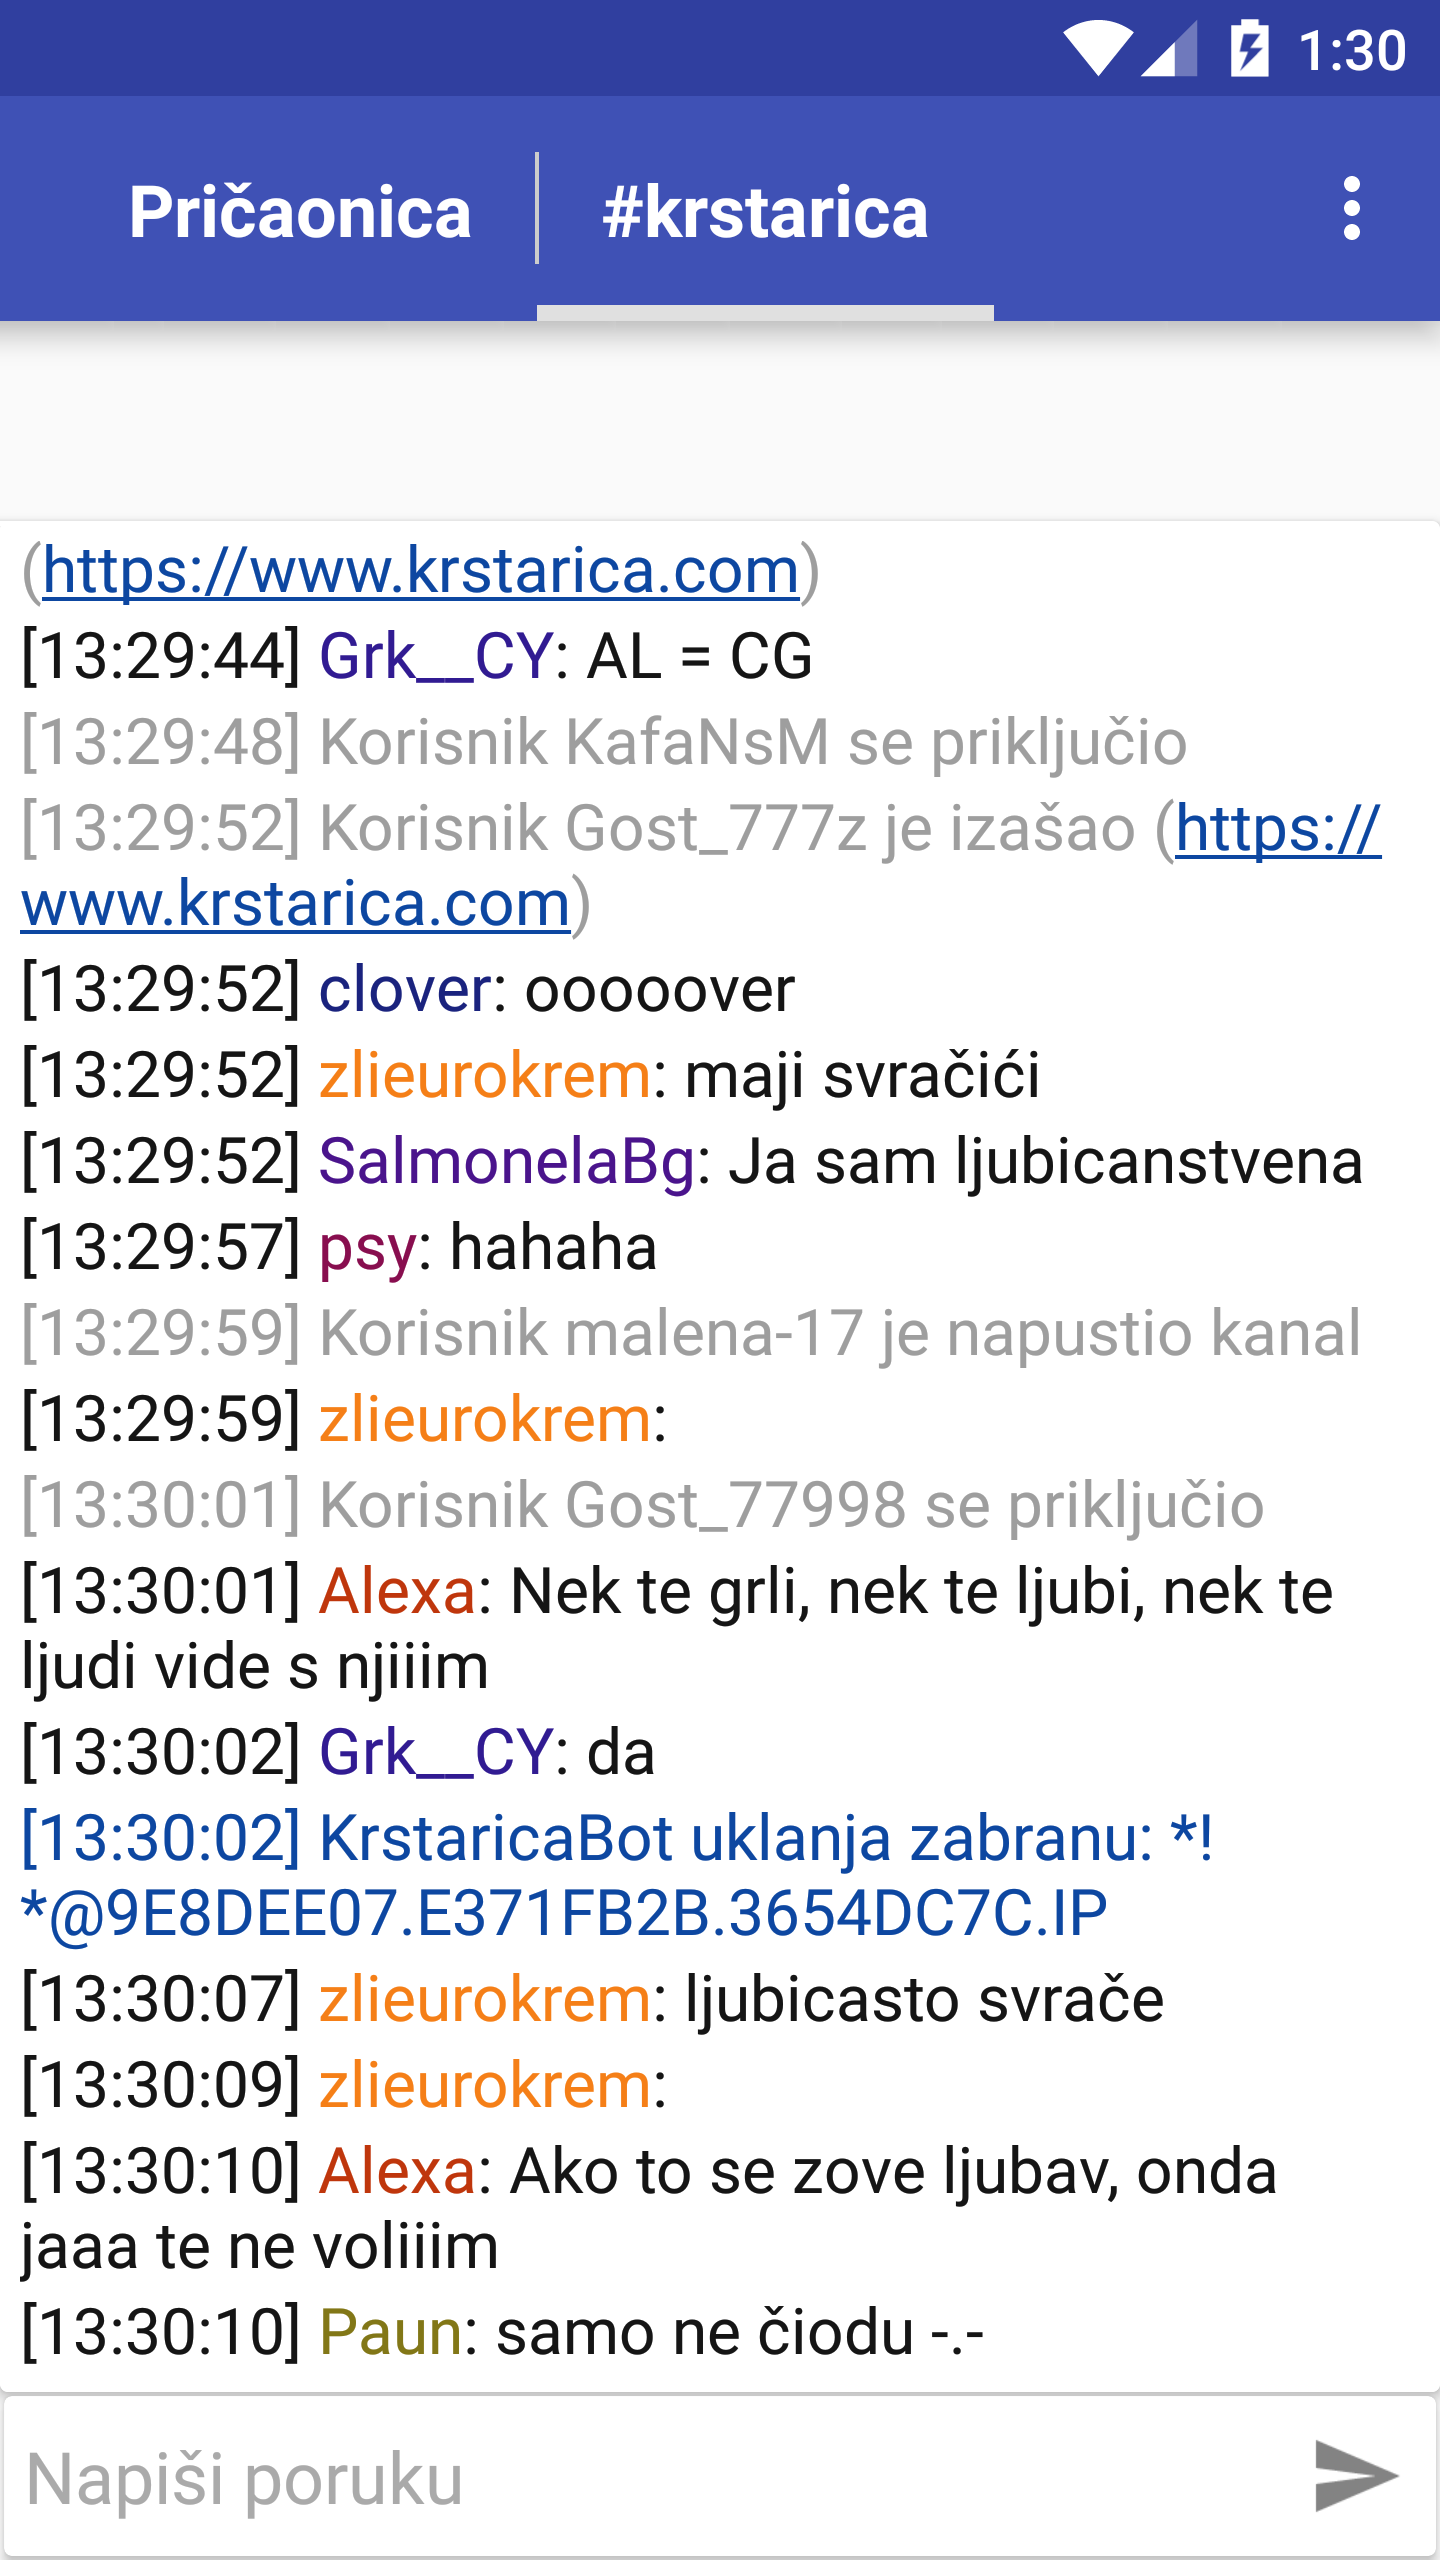 Srbije chat krstarica KRSTARICA CHAT